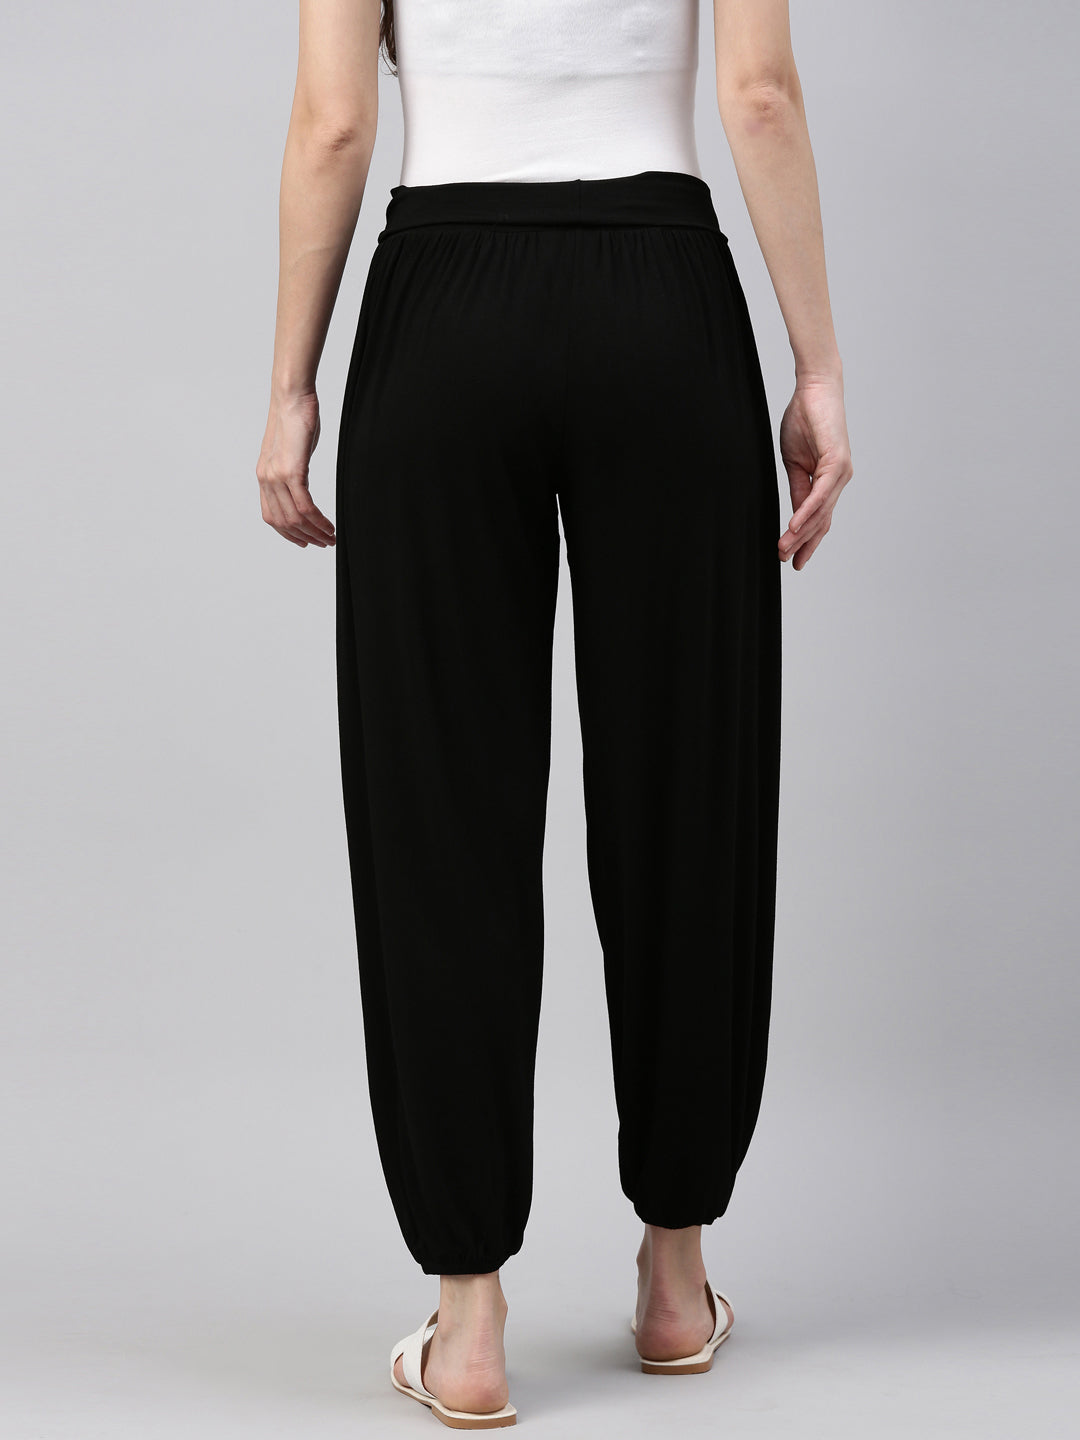 Gathered Terry Harem Lounge Pants - XS(0-2) - Black  Pants for women,  Harem pants, Leggings are not pants